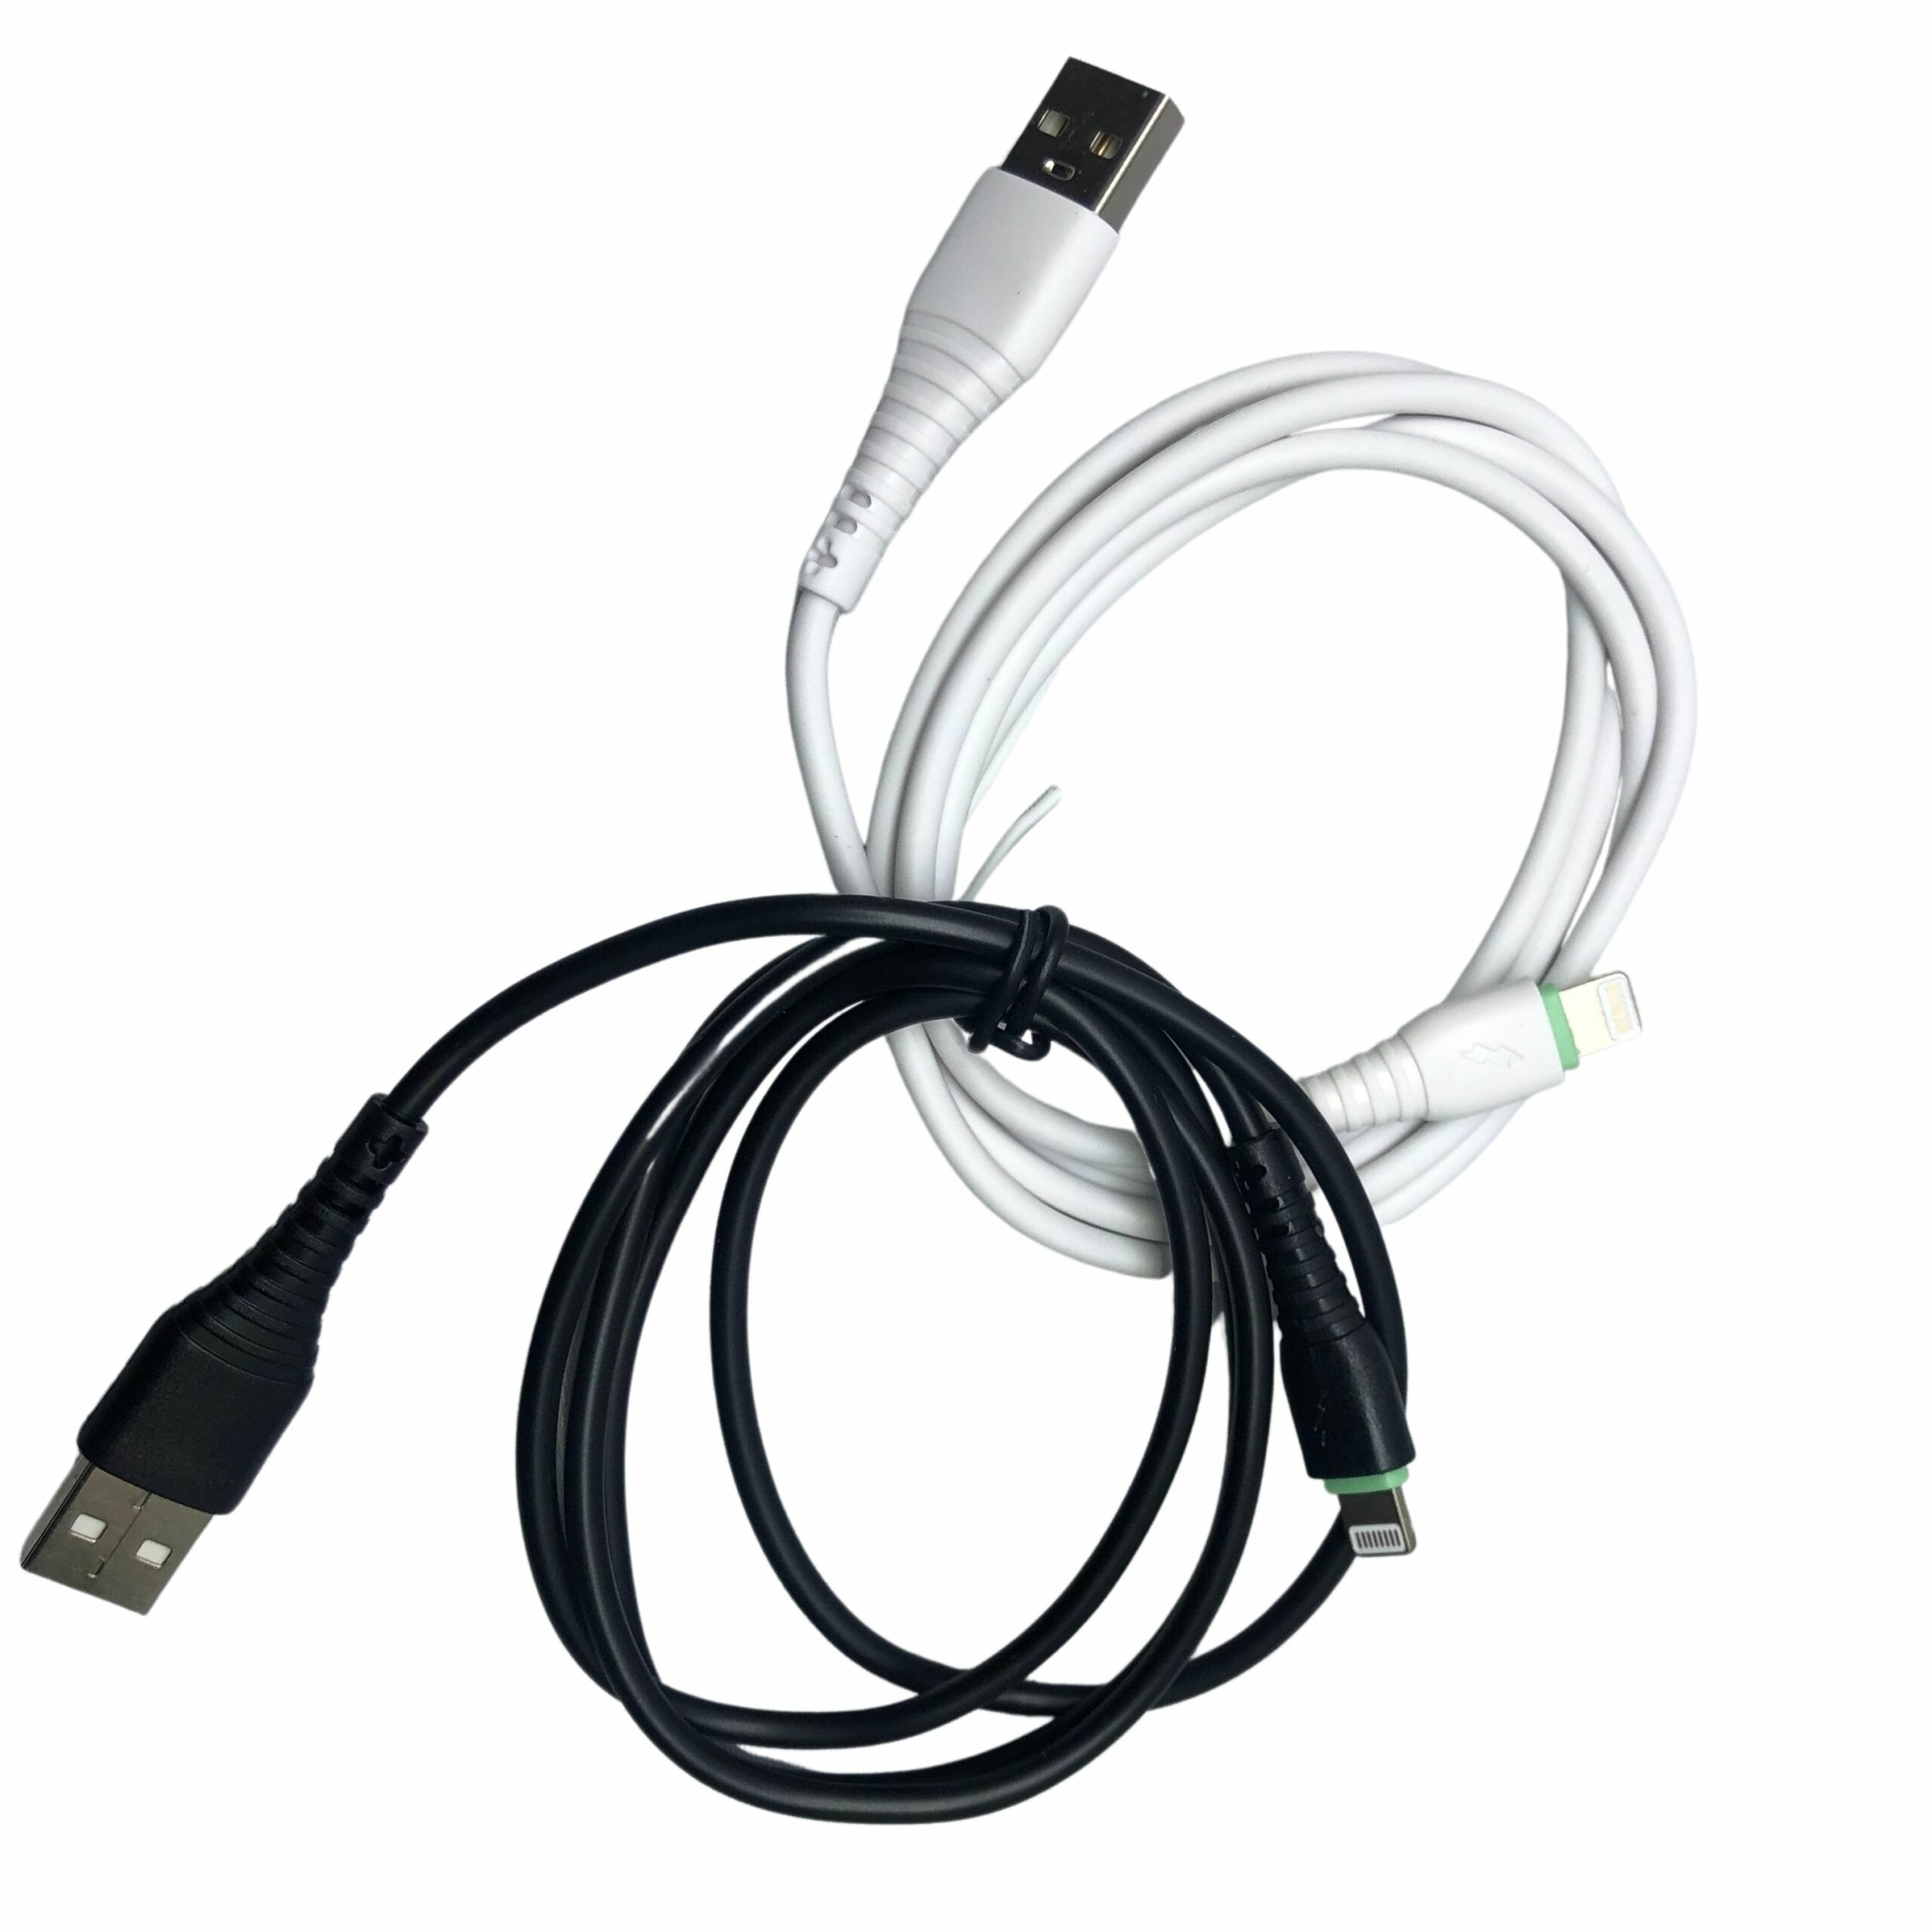 CABLE USB IPHONE WIR-1032P CARGA RAPIDA – Todo en Tecnología